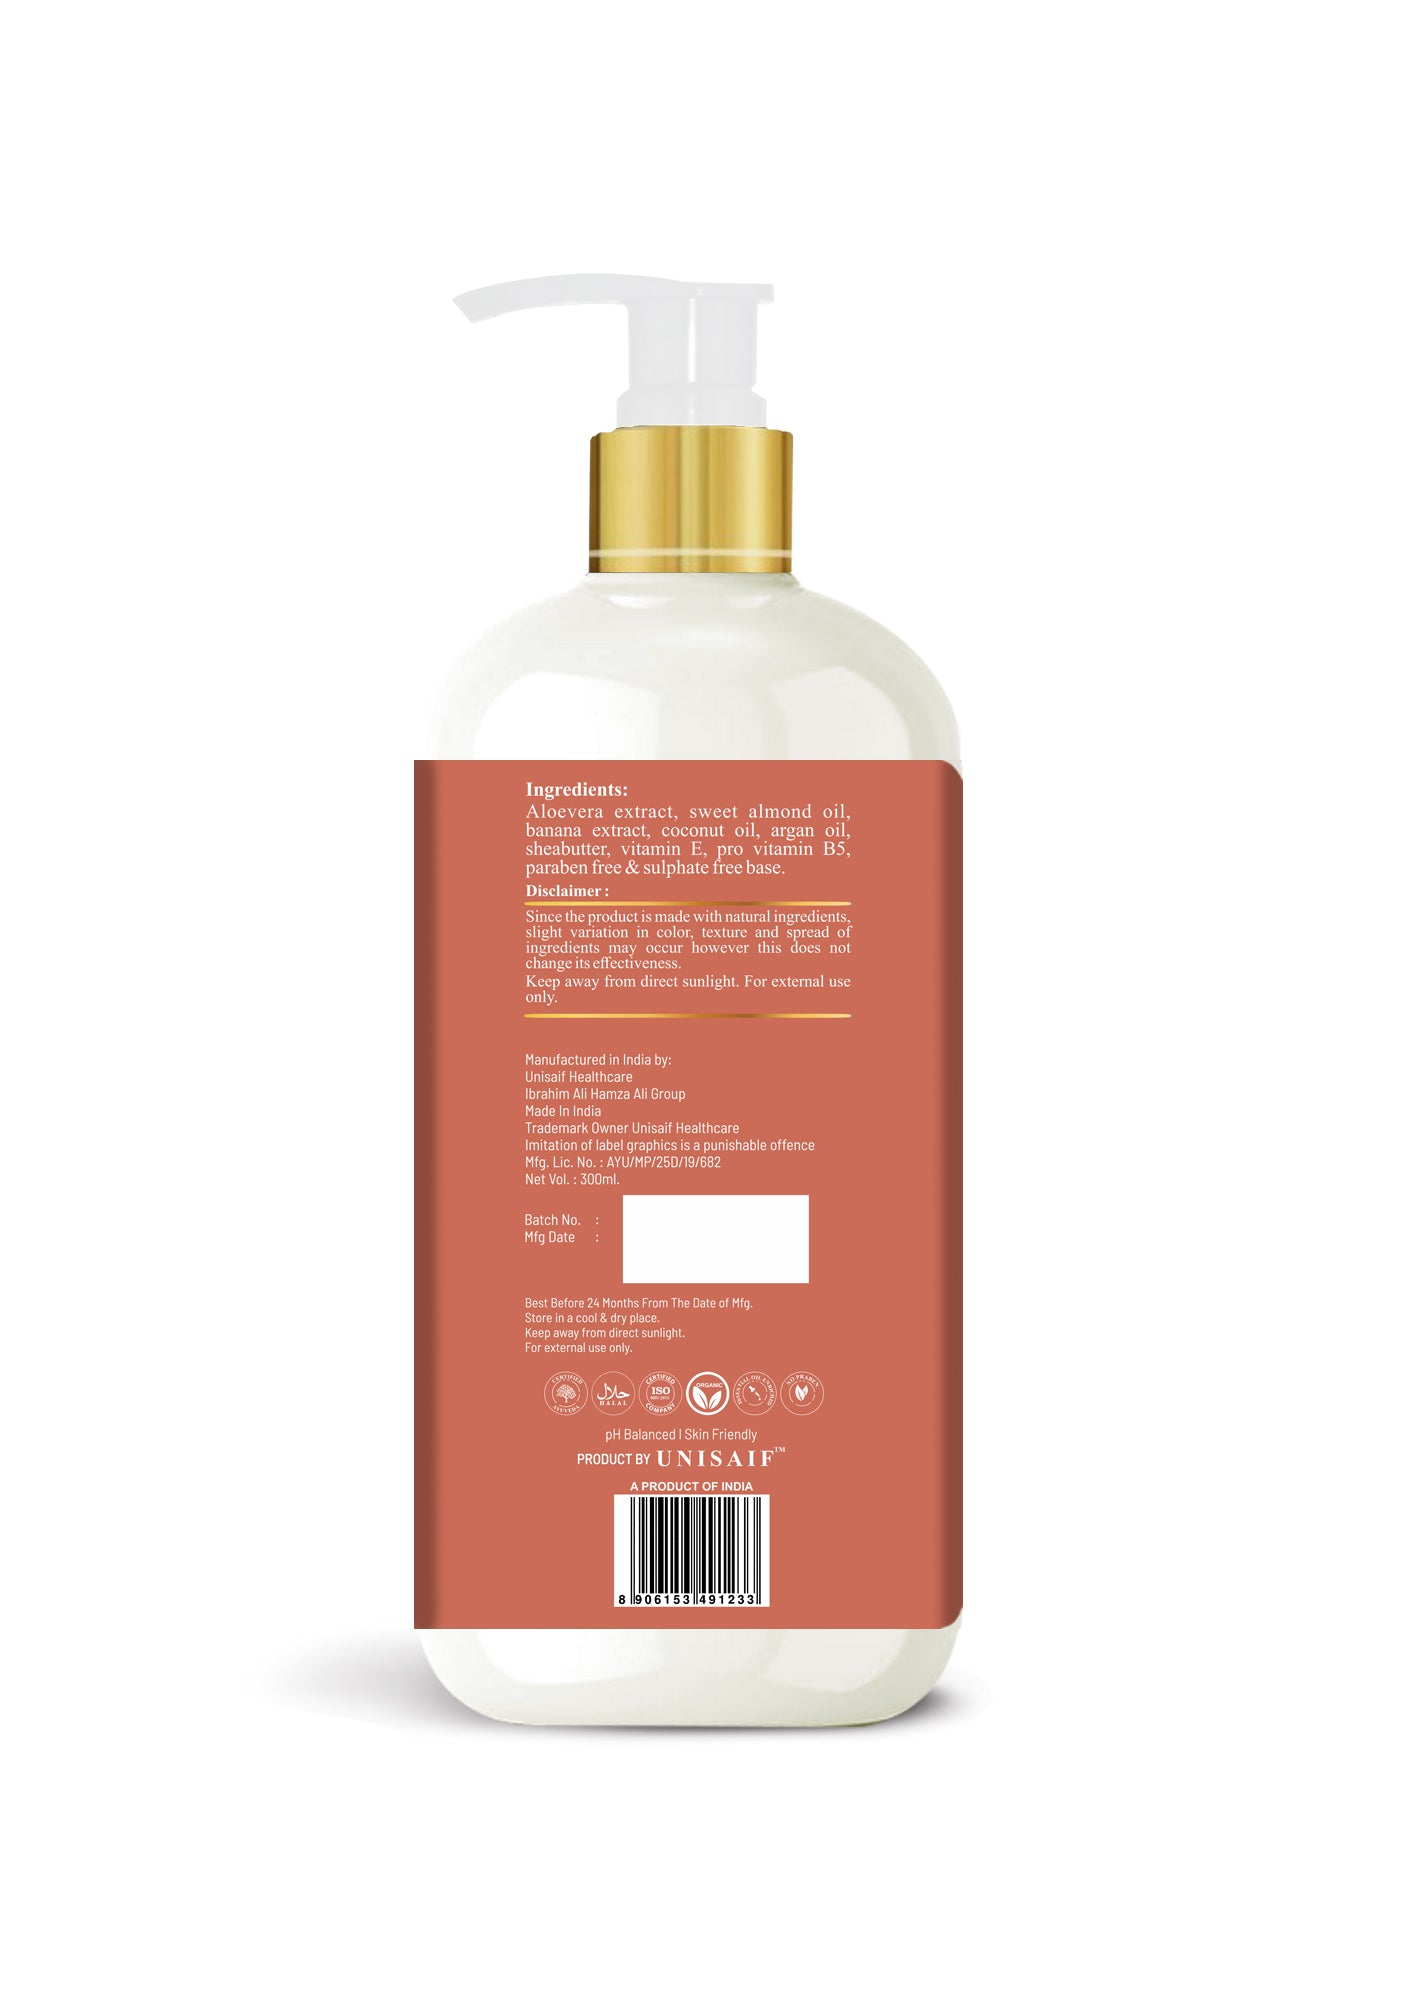 Banana Organic Shampoo (300ml) | Repairs Damage| Indepth Nourishment| Improves Hair Elasticity| NO SULPHATE NO PARABEN